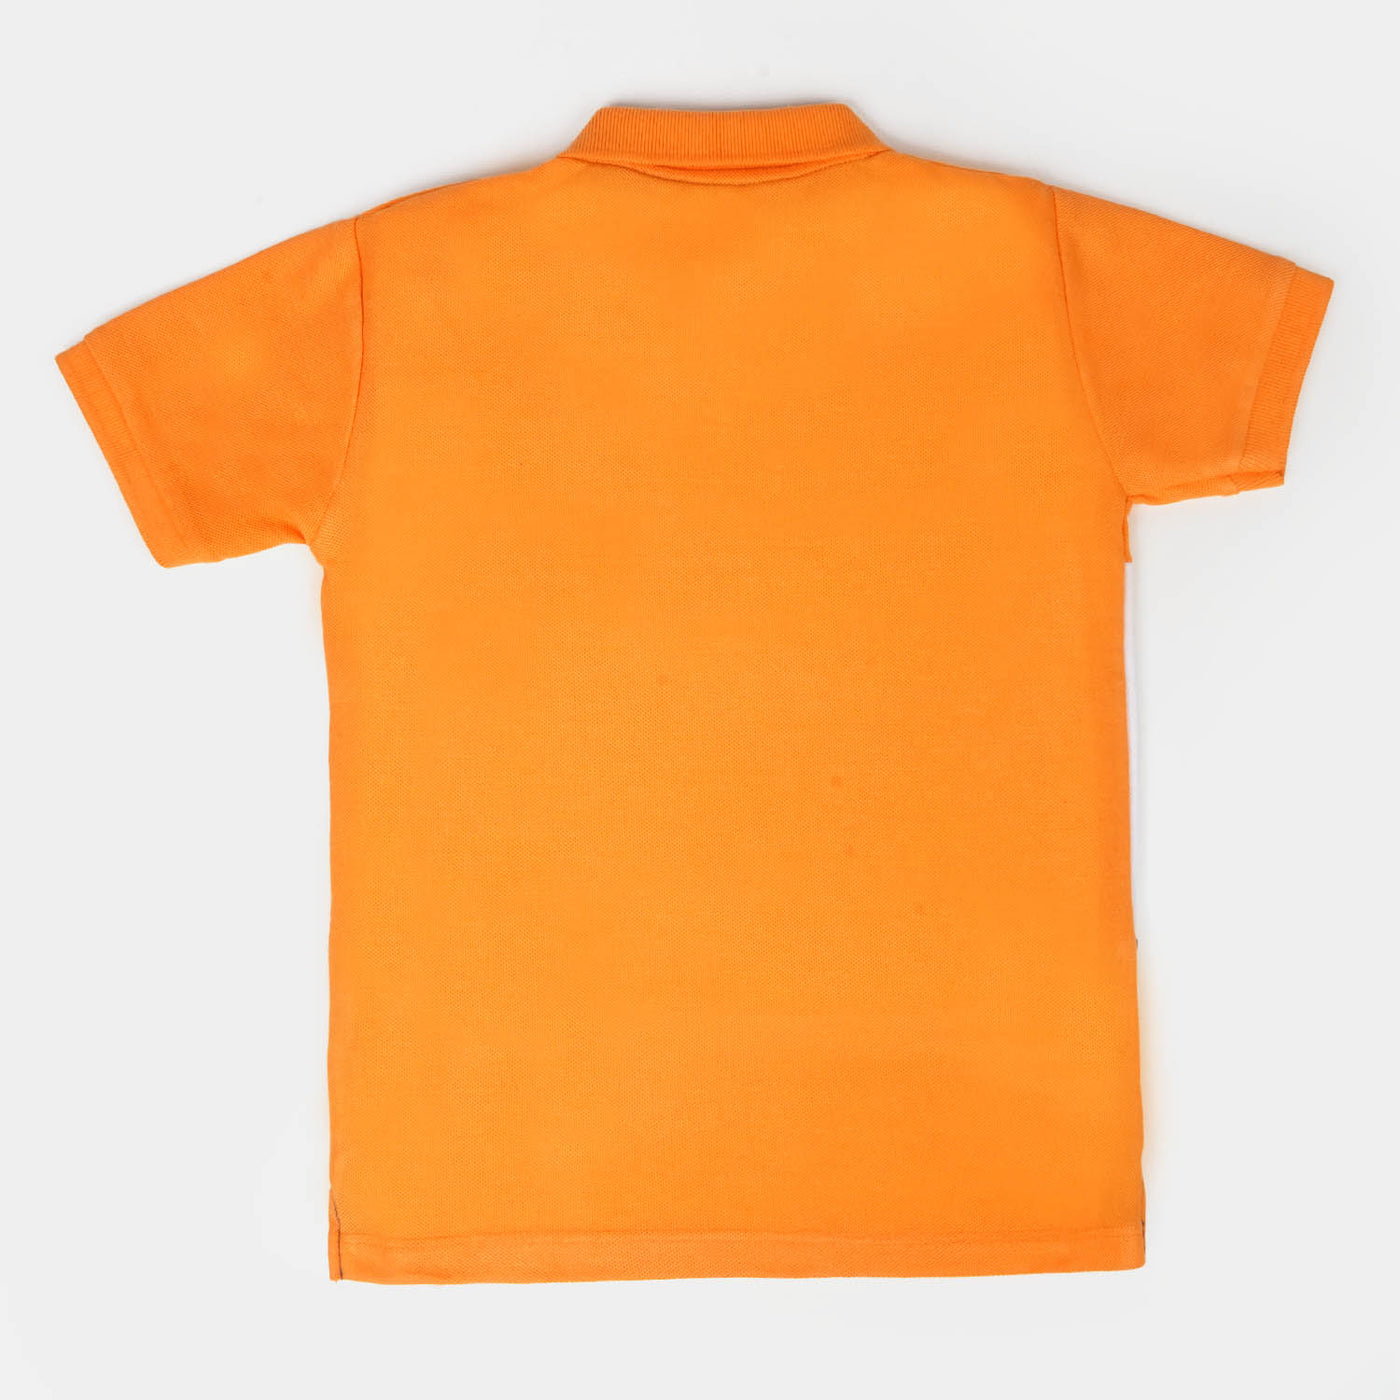 Boys Cotton Polo Shirt Tri Cut & Sew - Orange